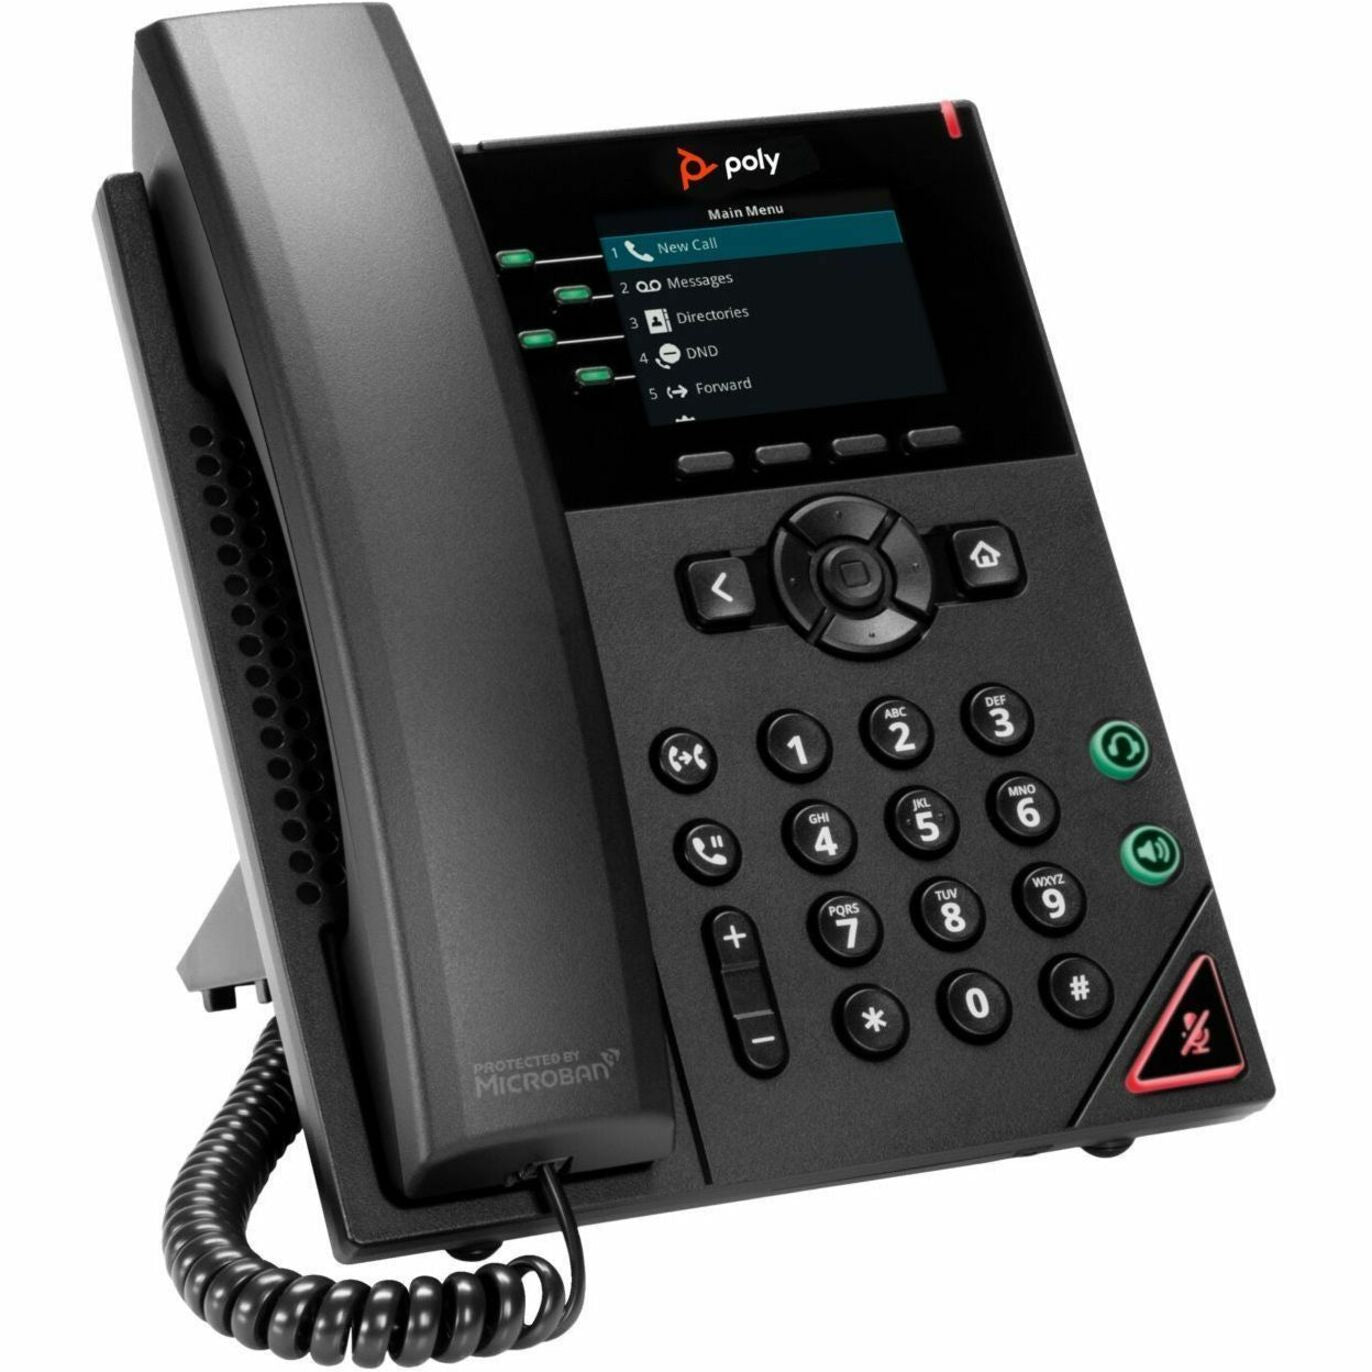 Poly (89B62AA) IP Phone